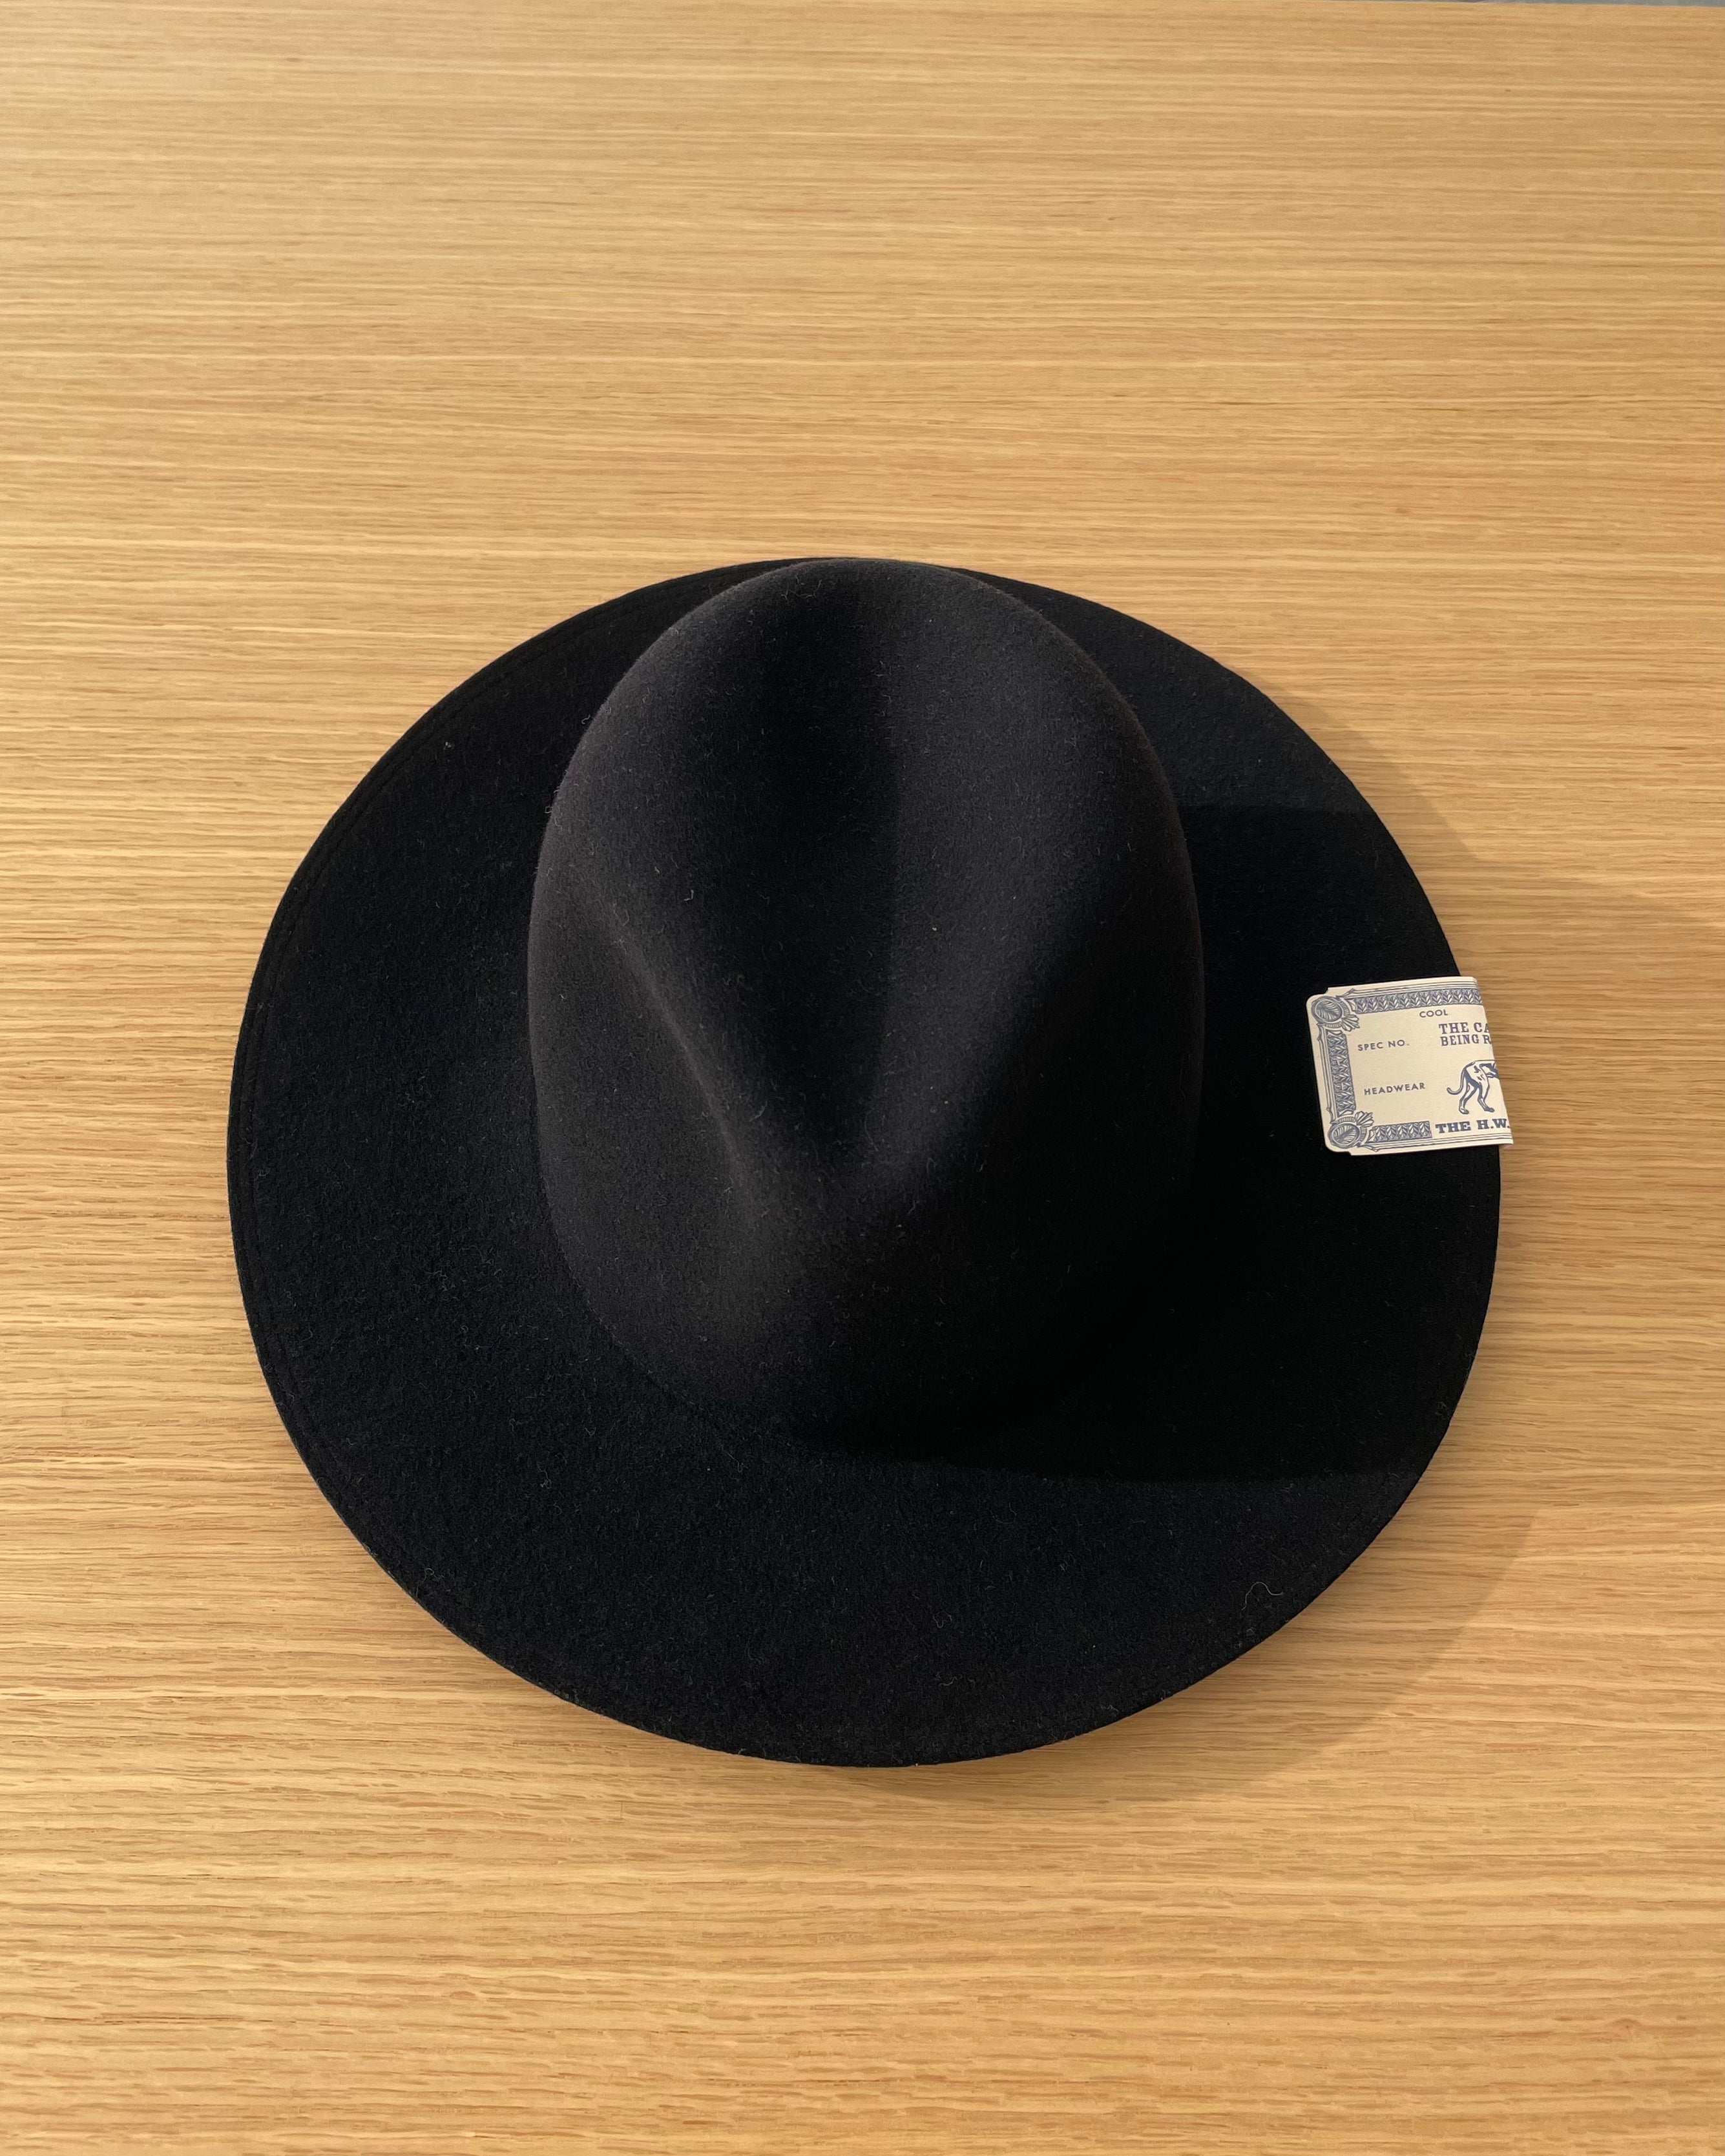 Travelers Hat in Black Merino Wool Felt